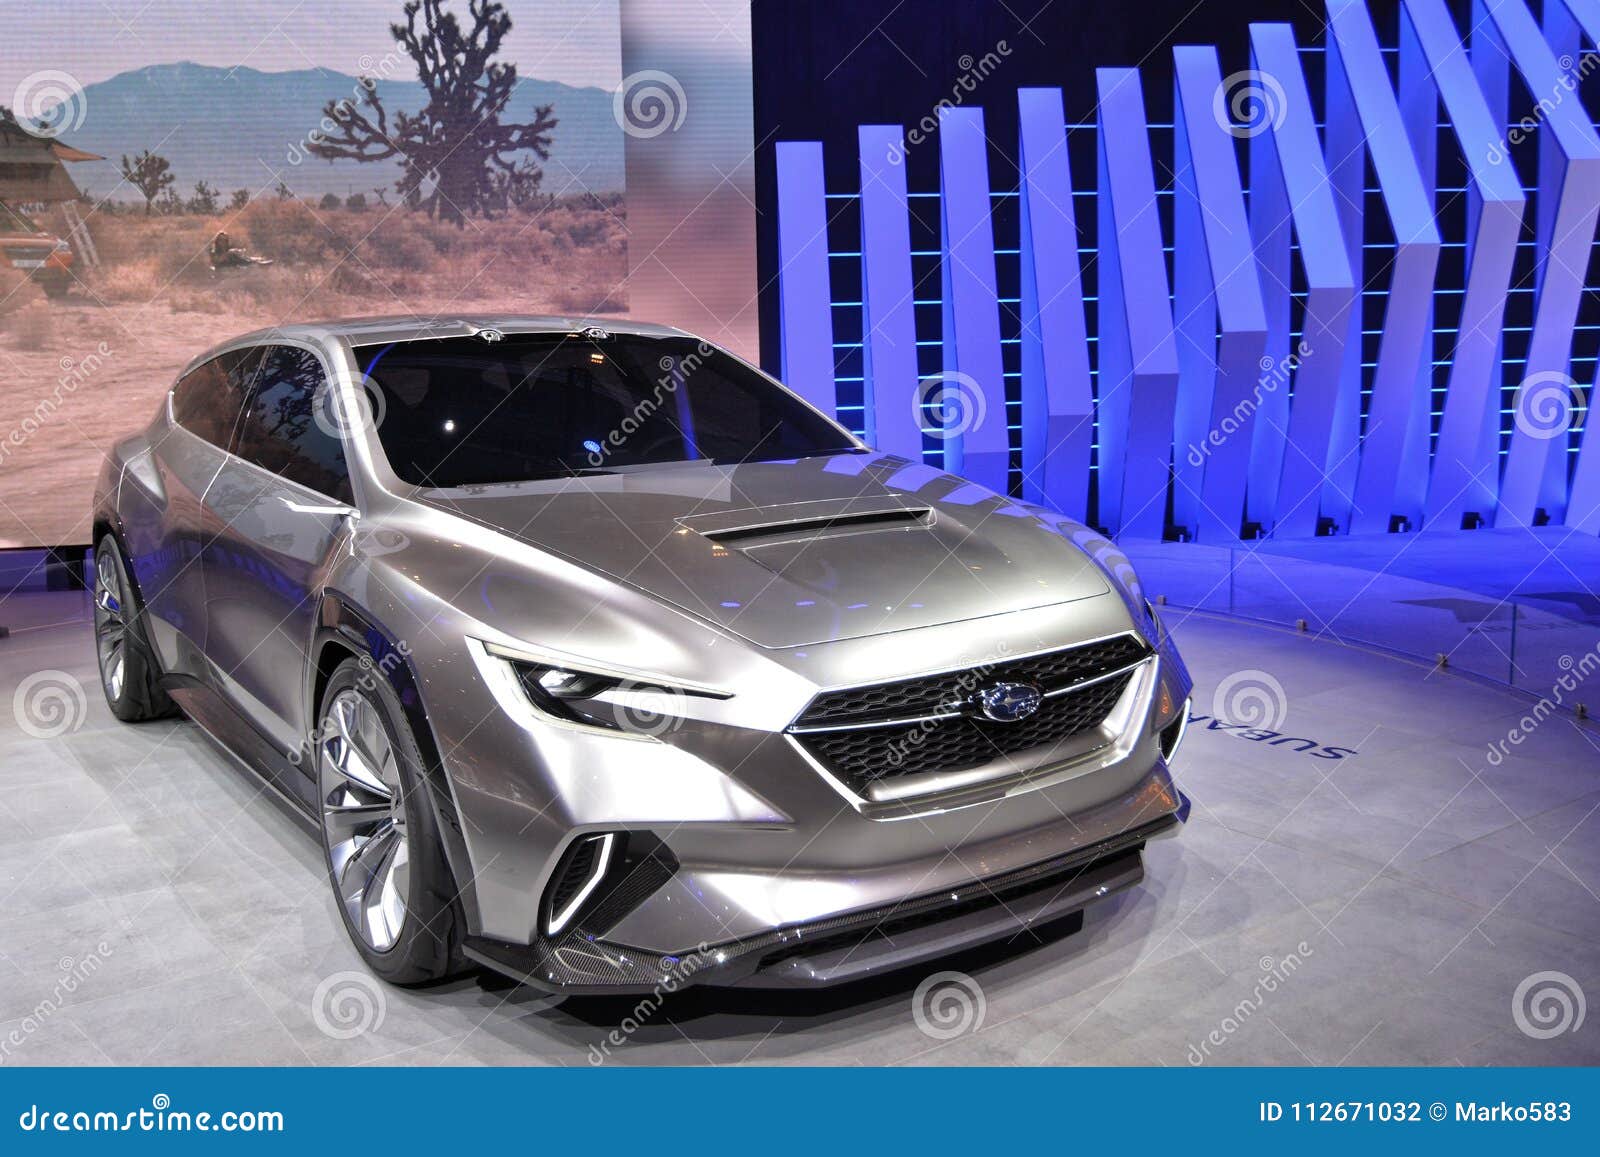 th Geneva International Motor Show 18 Subaru Viziv Tourer Concept Editorial Photography Image Of Show Observers